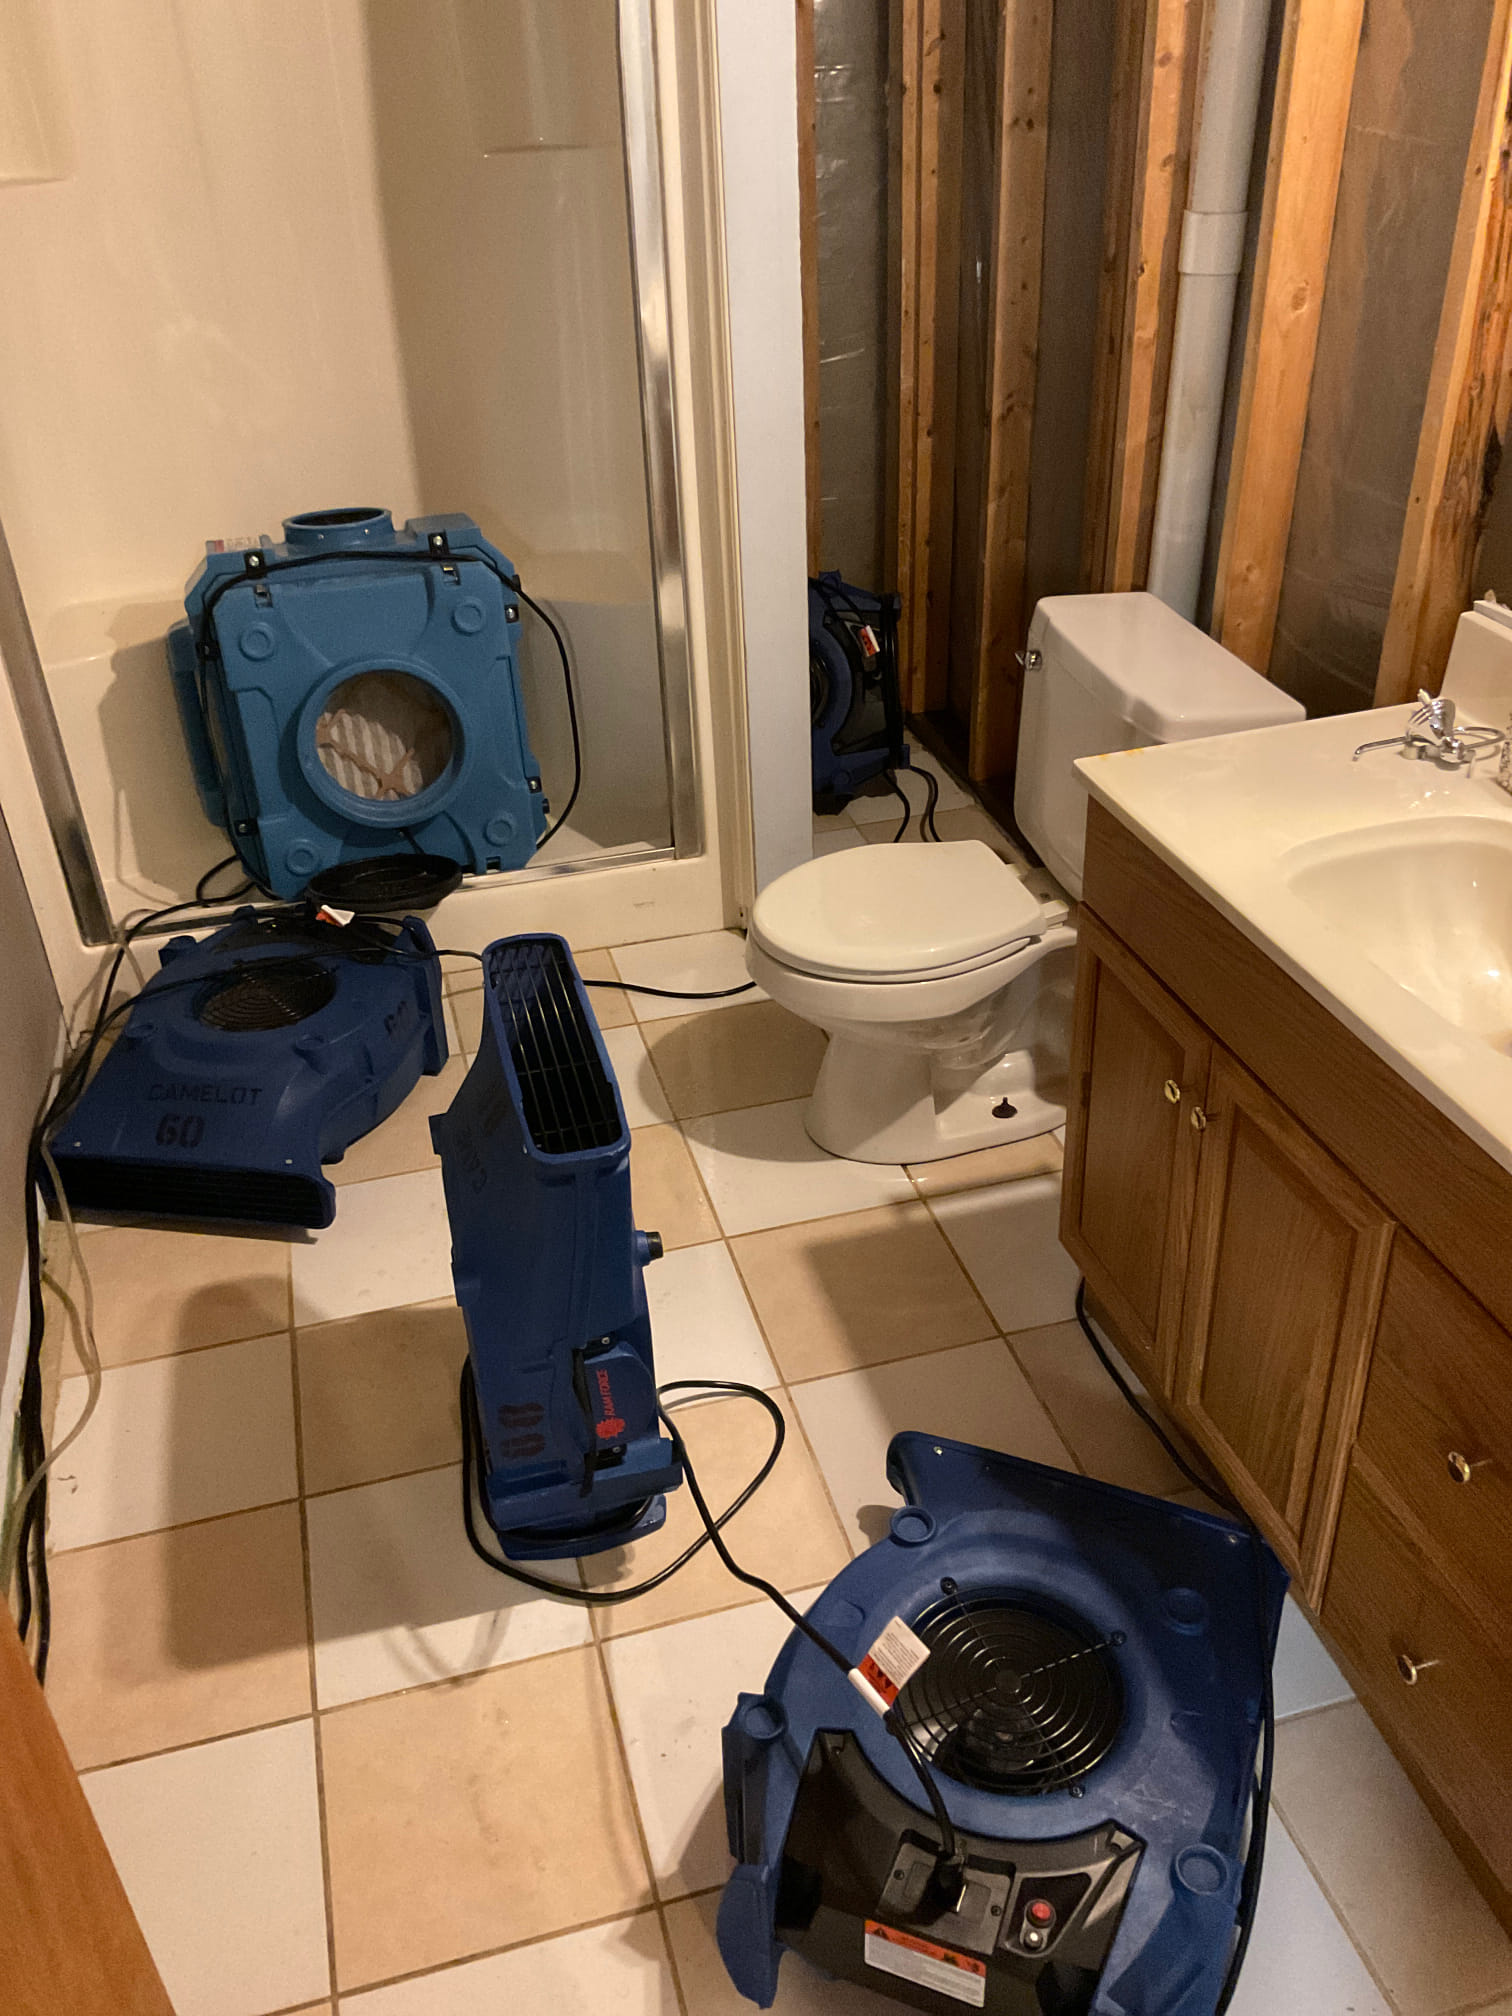 Toilet Overflow in Kalamazoo, MI